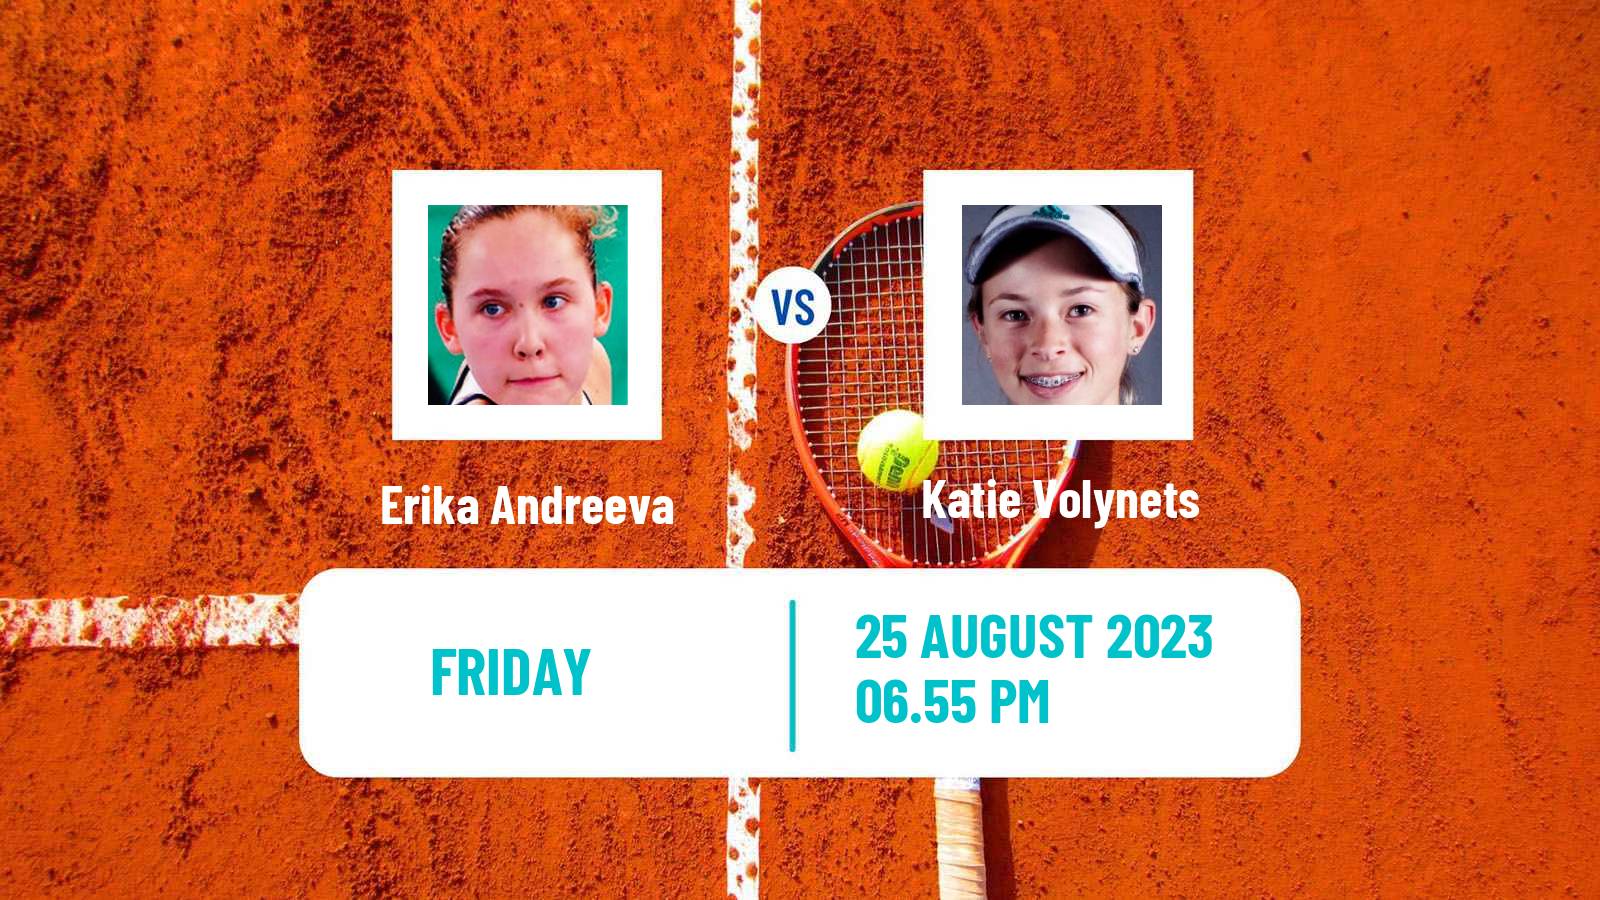 Tennis WTA US Open Erika Andreeva - Katie Volynets